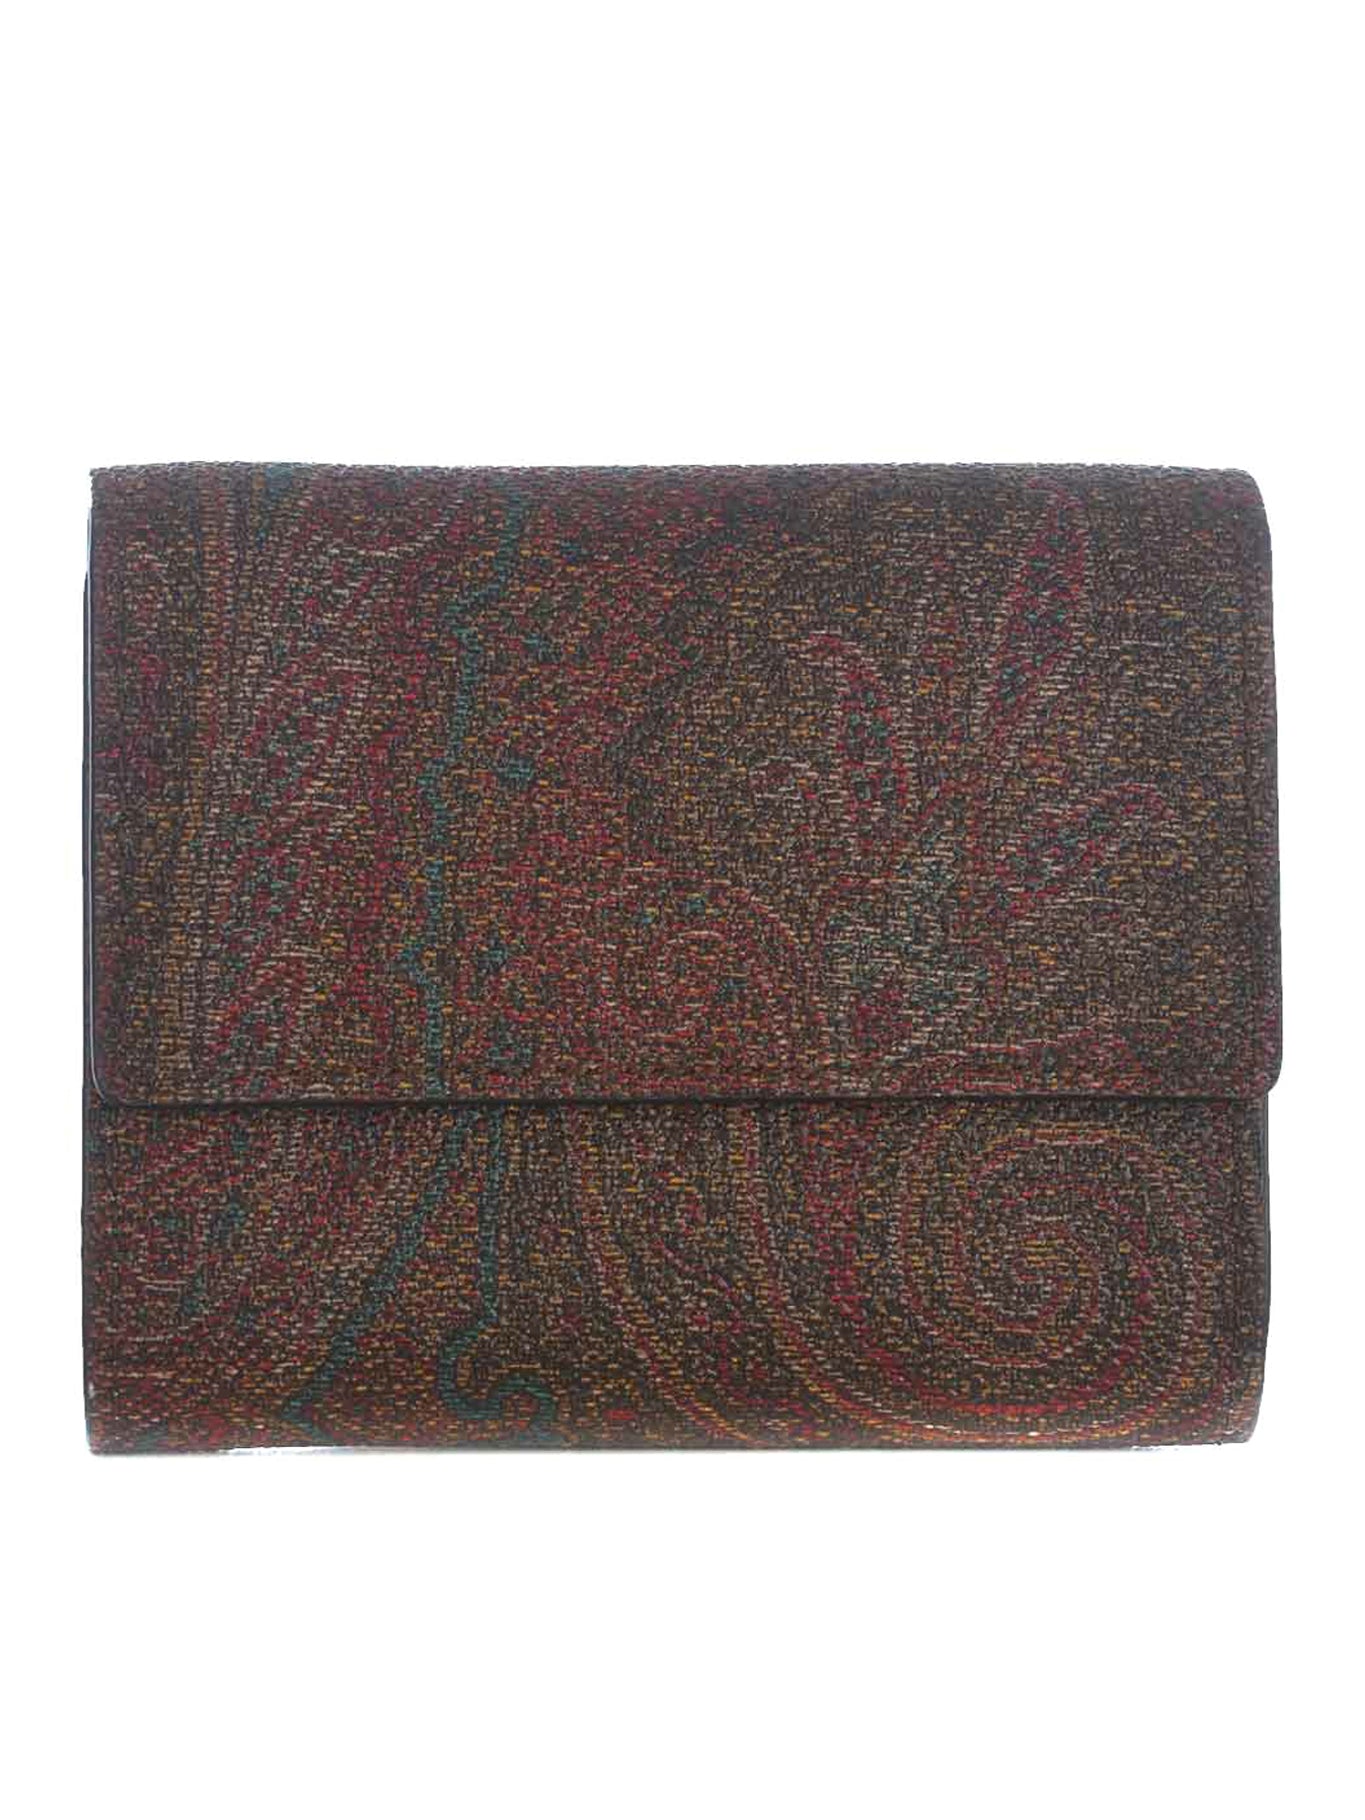 Etro wallet in paisley cotton